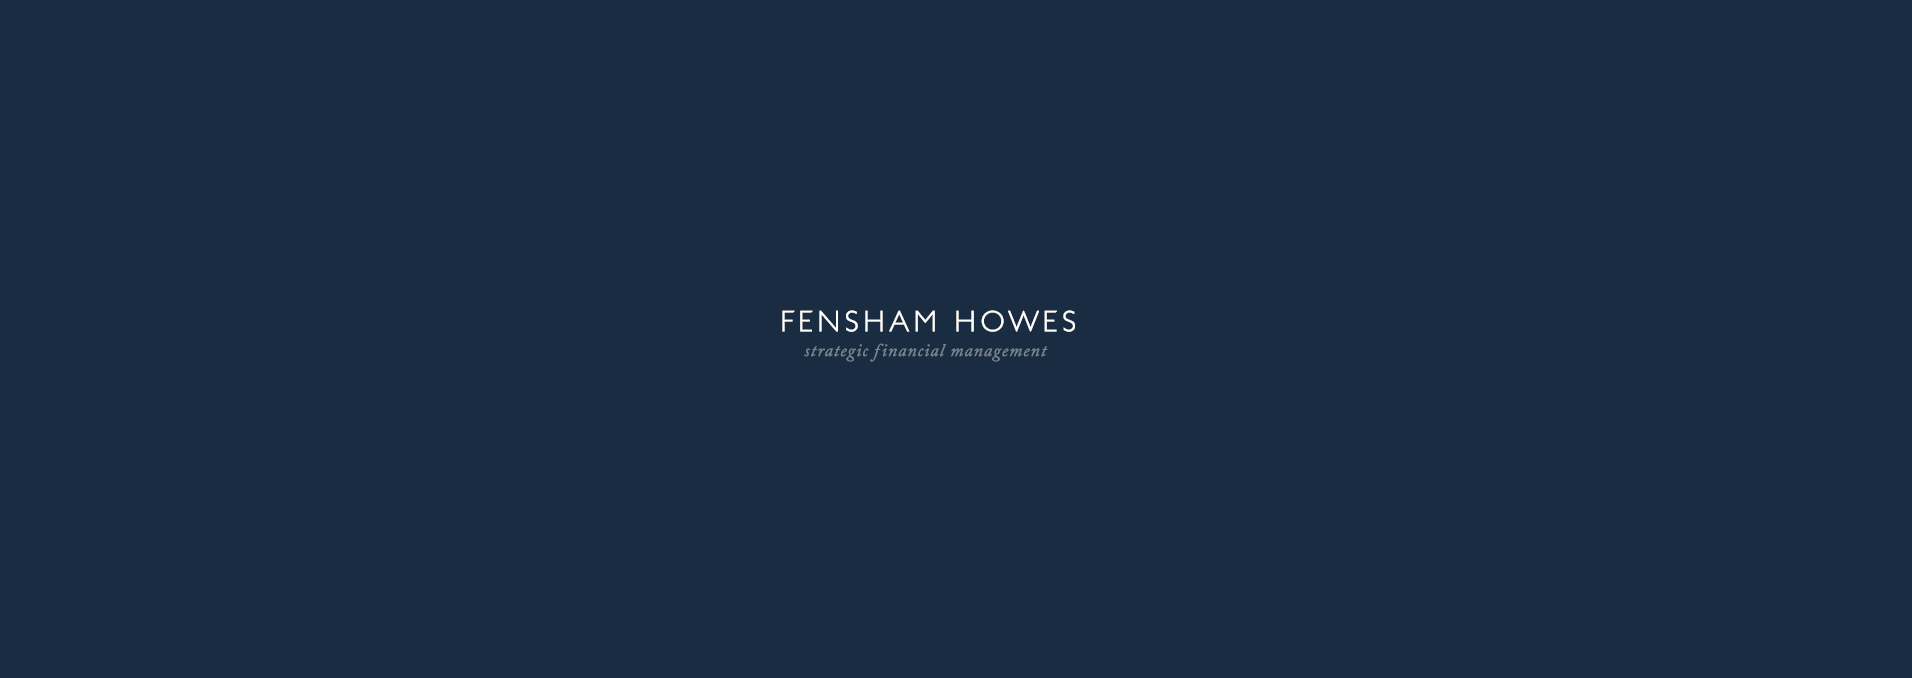 fensham howes header